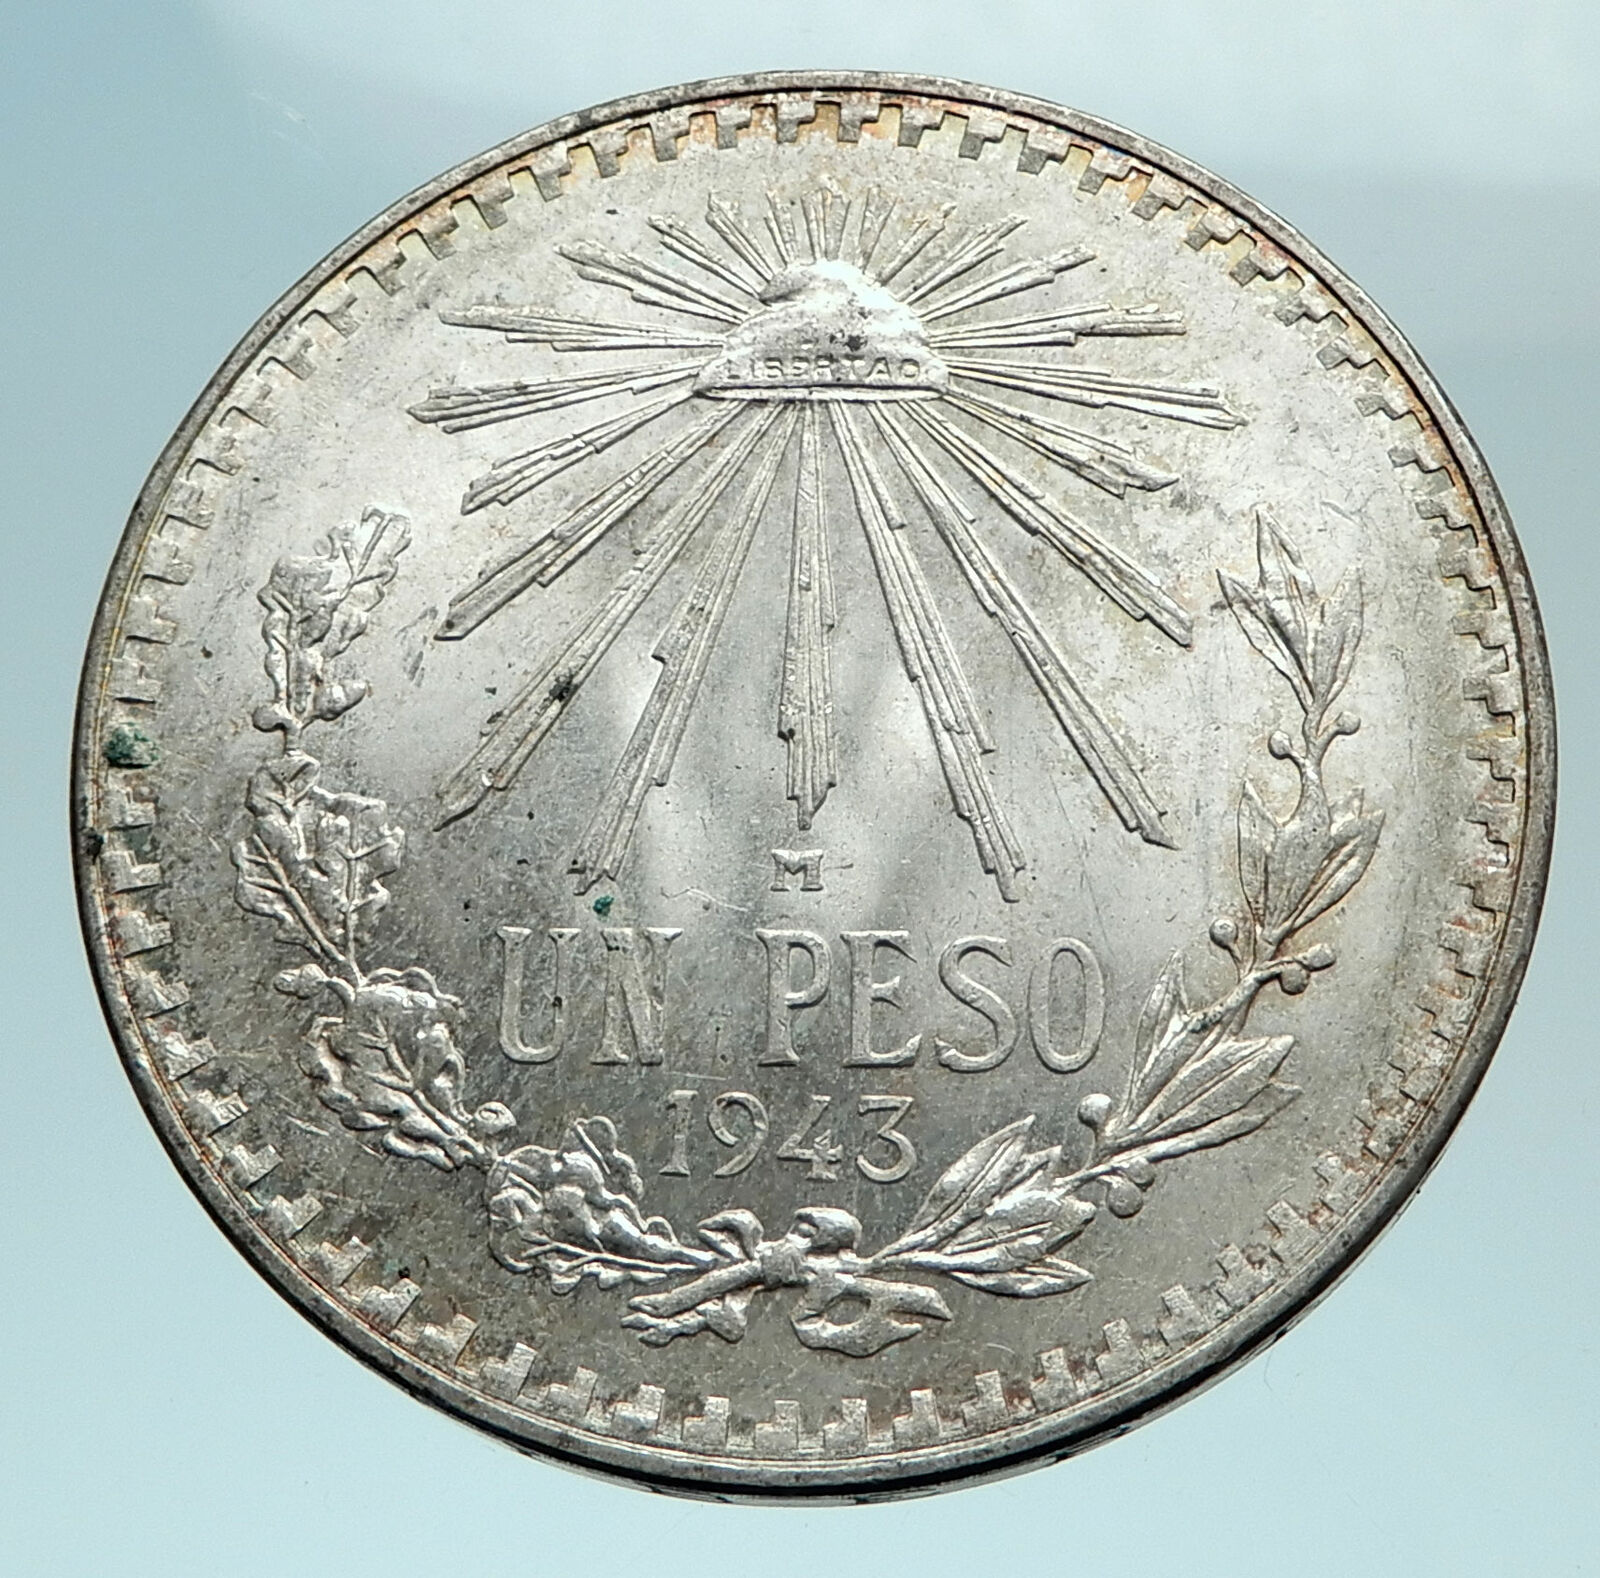 1943 M MEXICO Large Eagle Liberty Cap Mexican Antique Silver 1 Peso Coin i79458